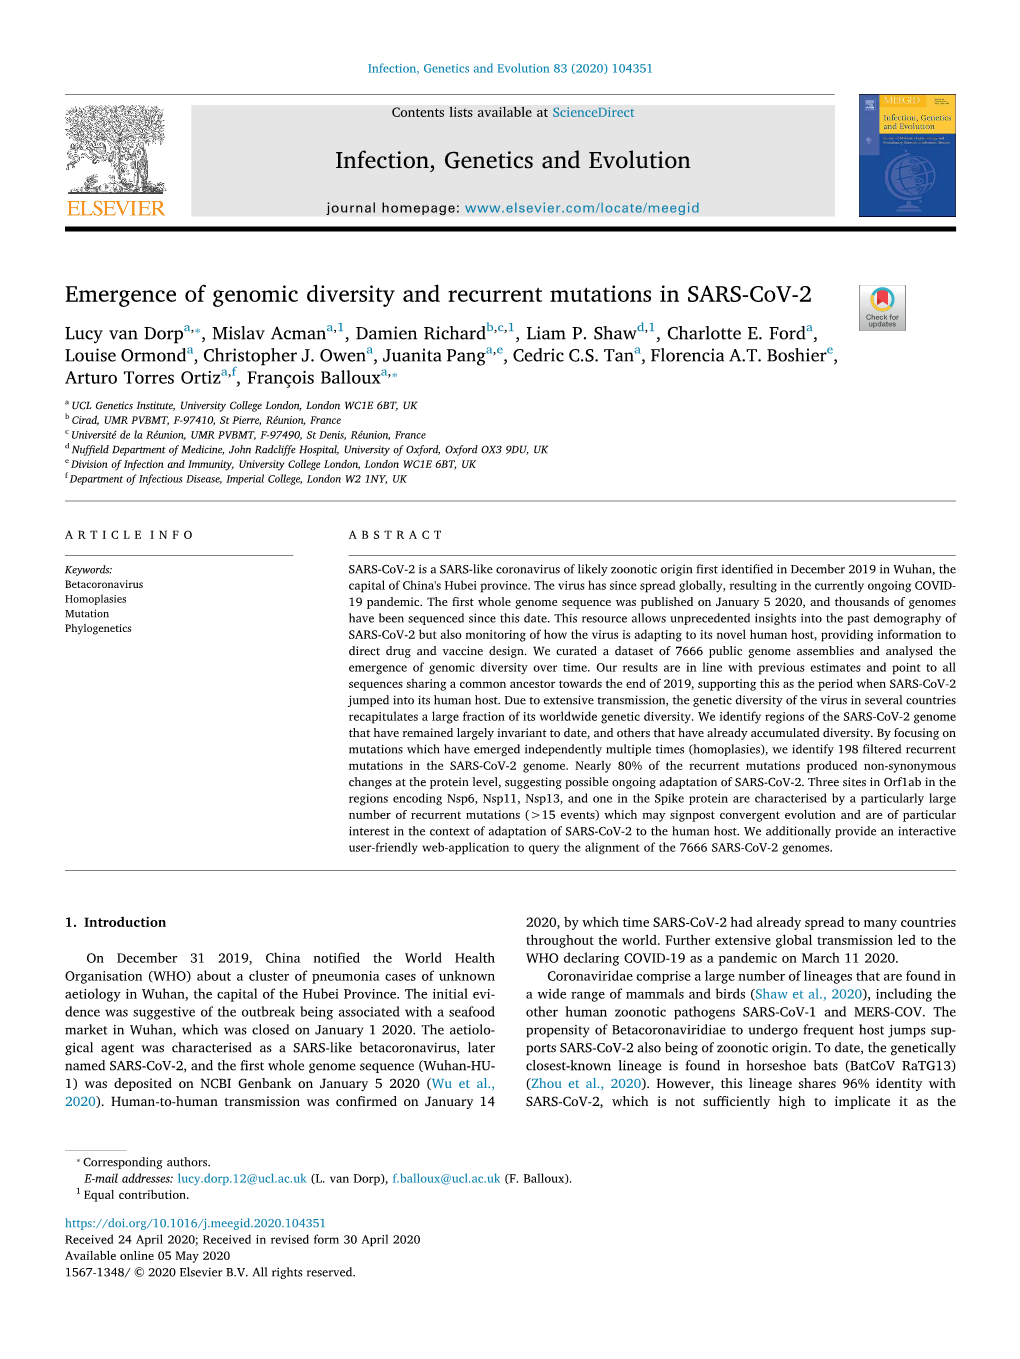 Emergence of Genomic Diversity and Recurrent Mutations in SARS-Cov-2 T ⁎ Lucy Van Dorpa, , Mislav Acmana,1, Damien Richardb,C,1, Liam P